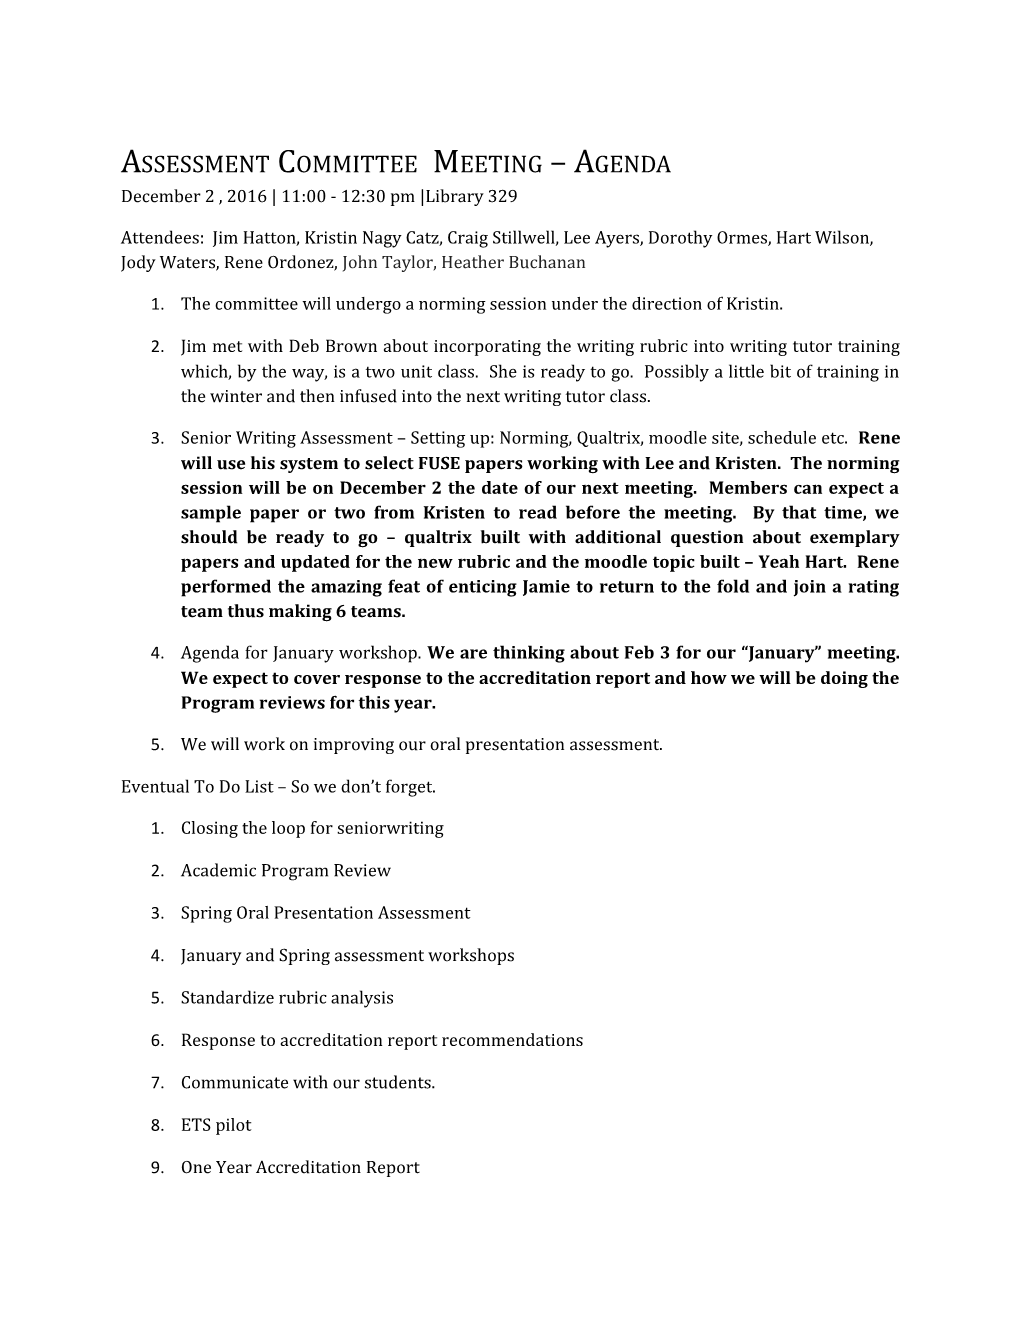 Assessment Committee Meeting Agenda